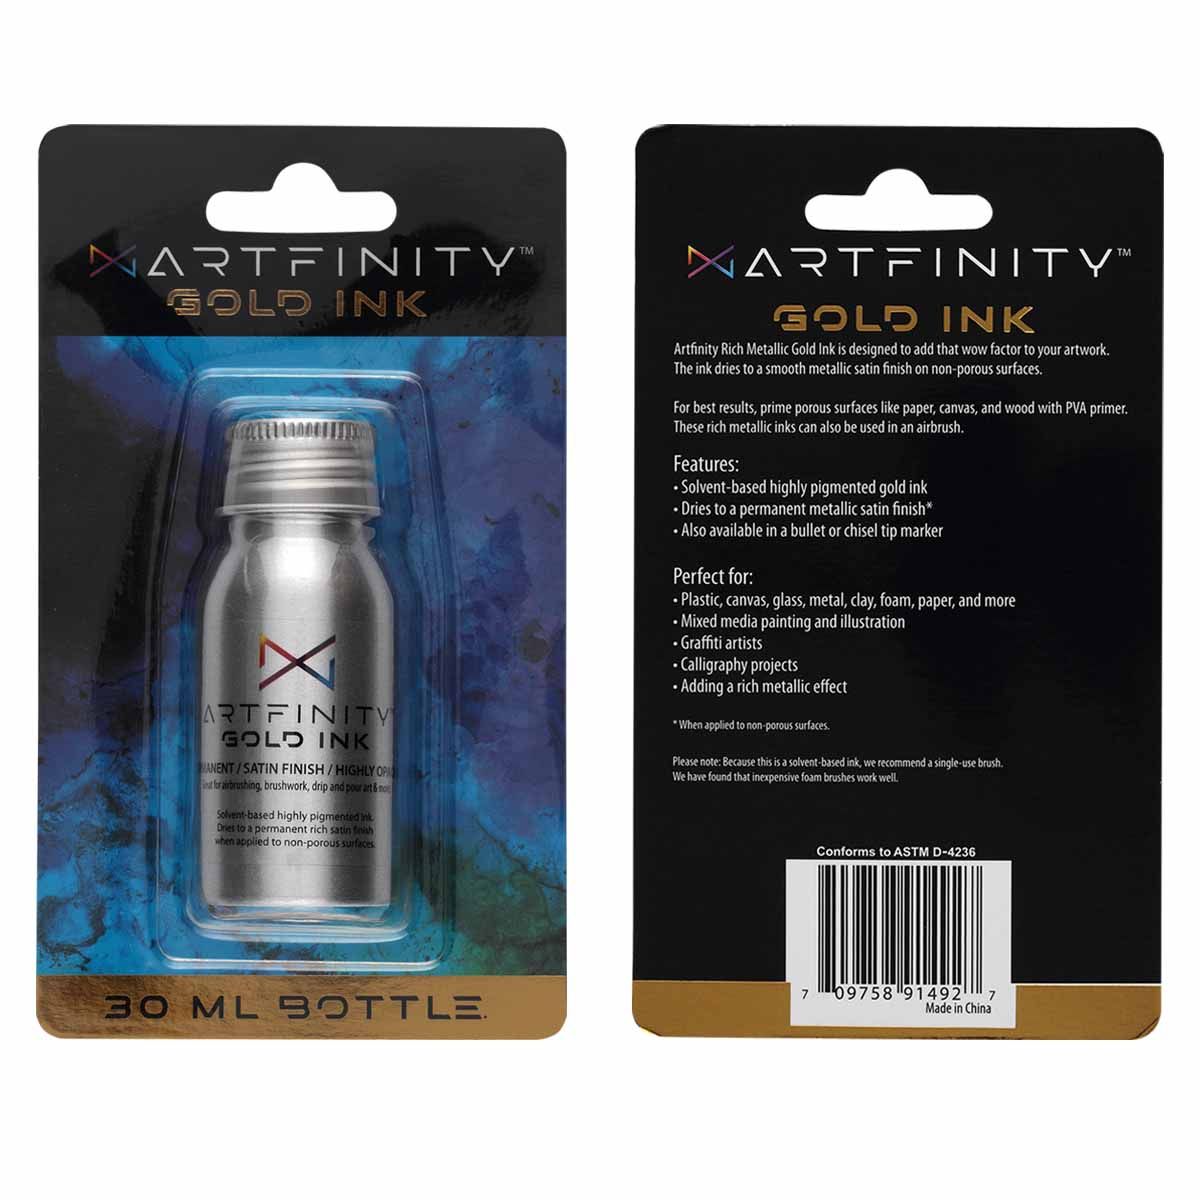 Make an impact with Artfinity Rich Metallic Inks